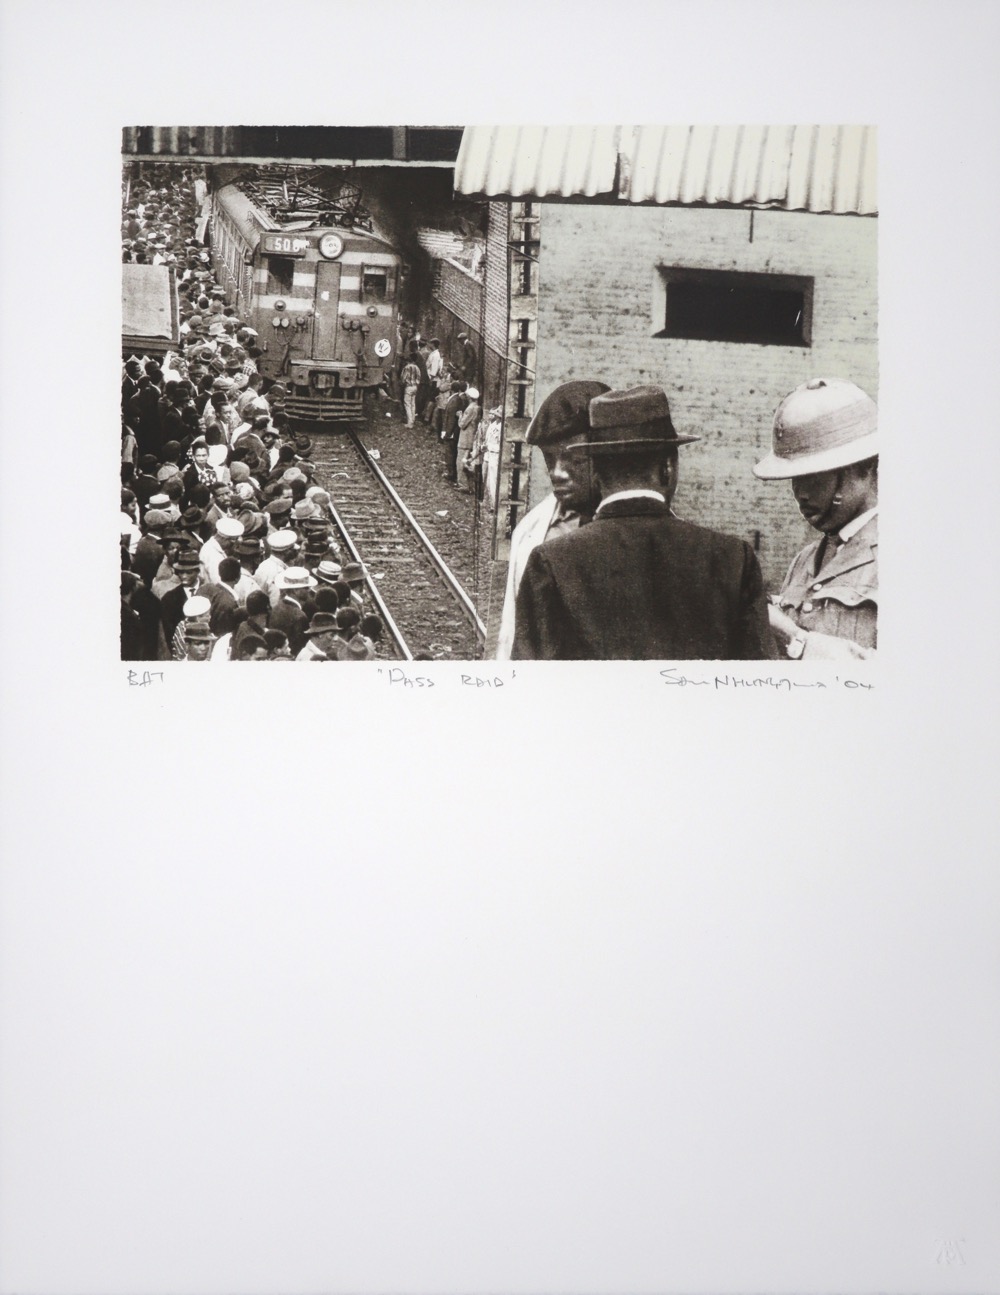 Apartheid policeman inspecting men's documentation with a crowded railway station platform